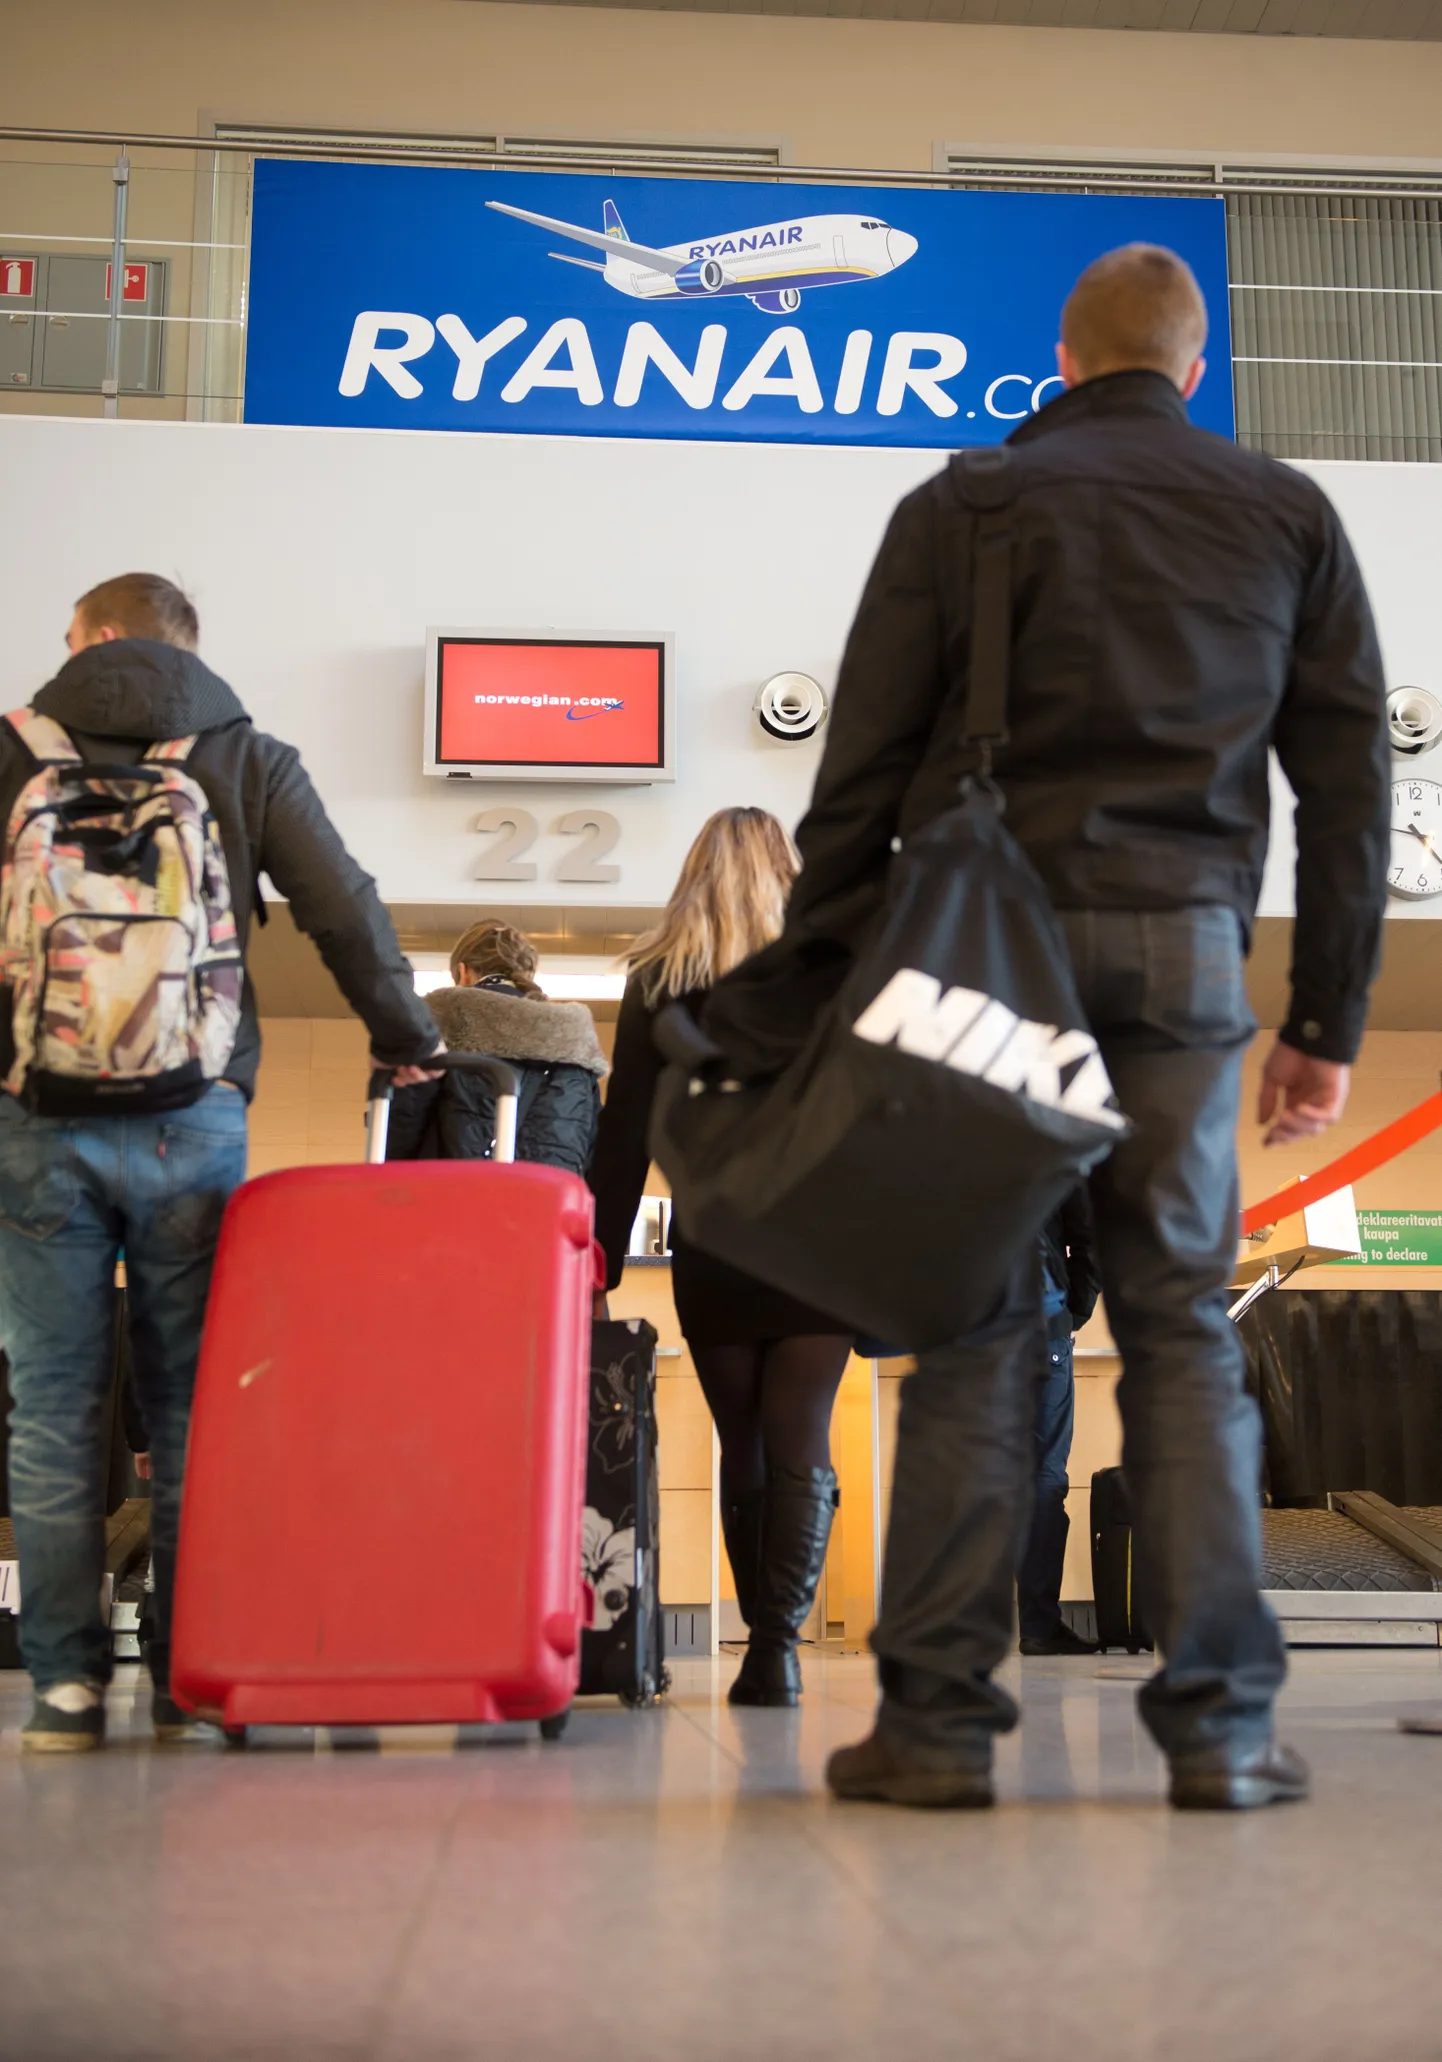 Одного пассажира на августовском рейсе Ryanair в Жирону не оказалось. Не пустили.